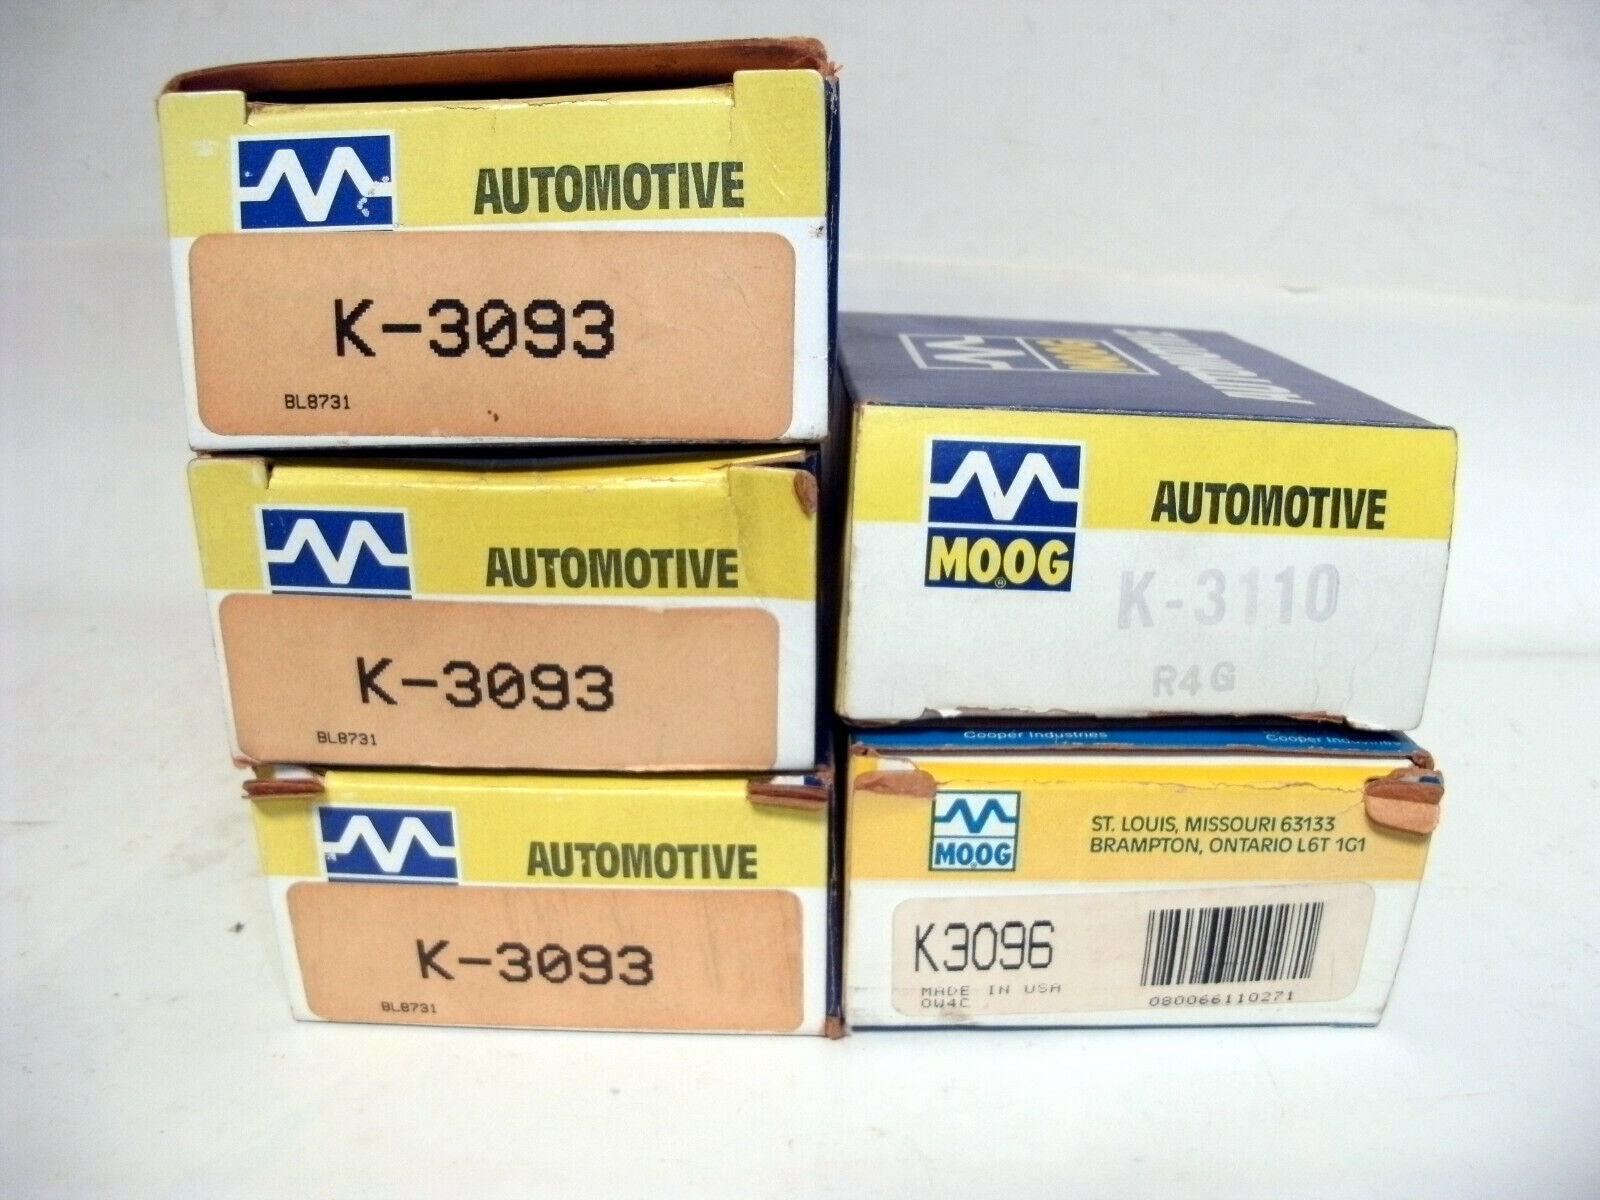 Lot of NOS Moog Chassis Parts for Ambassador AMX Concord Gremlin Hornet Matador